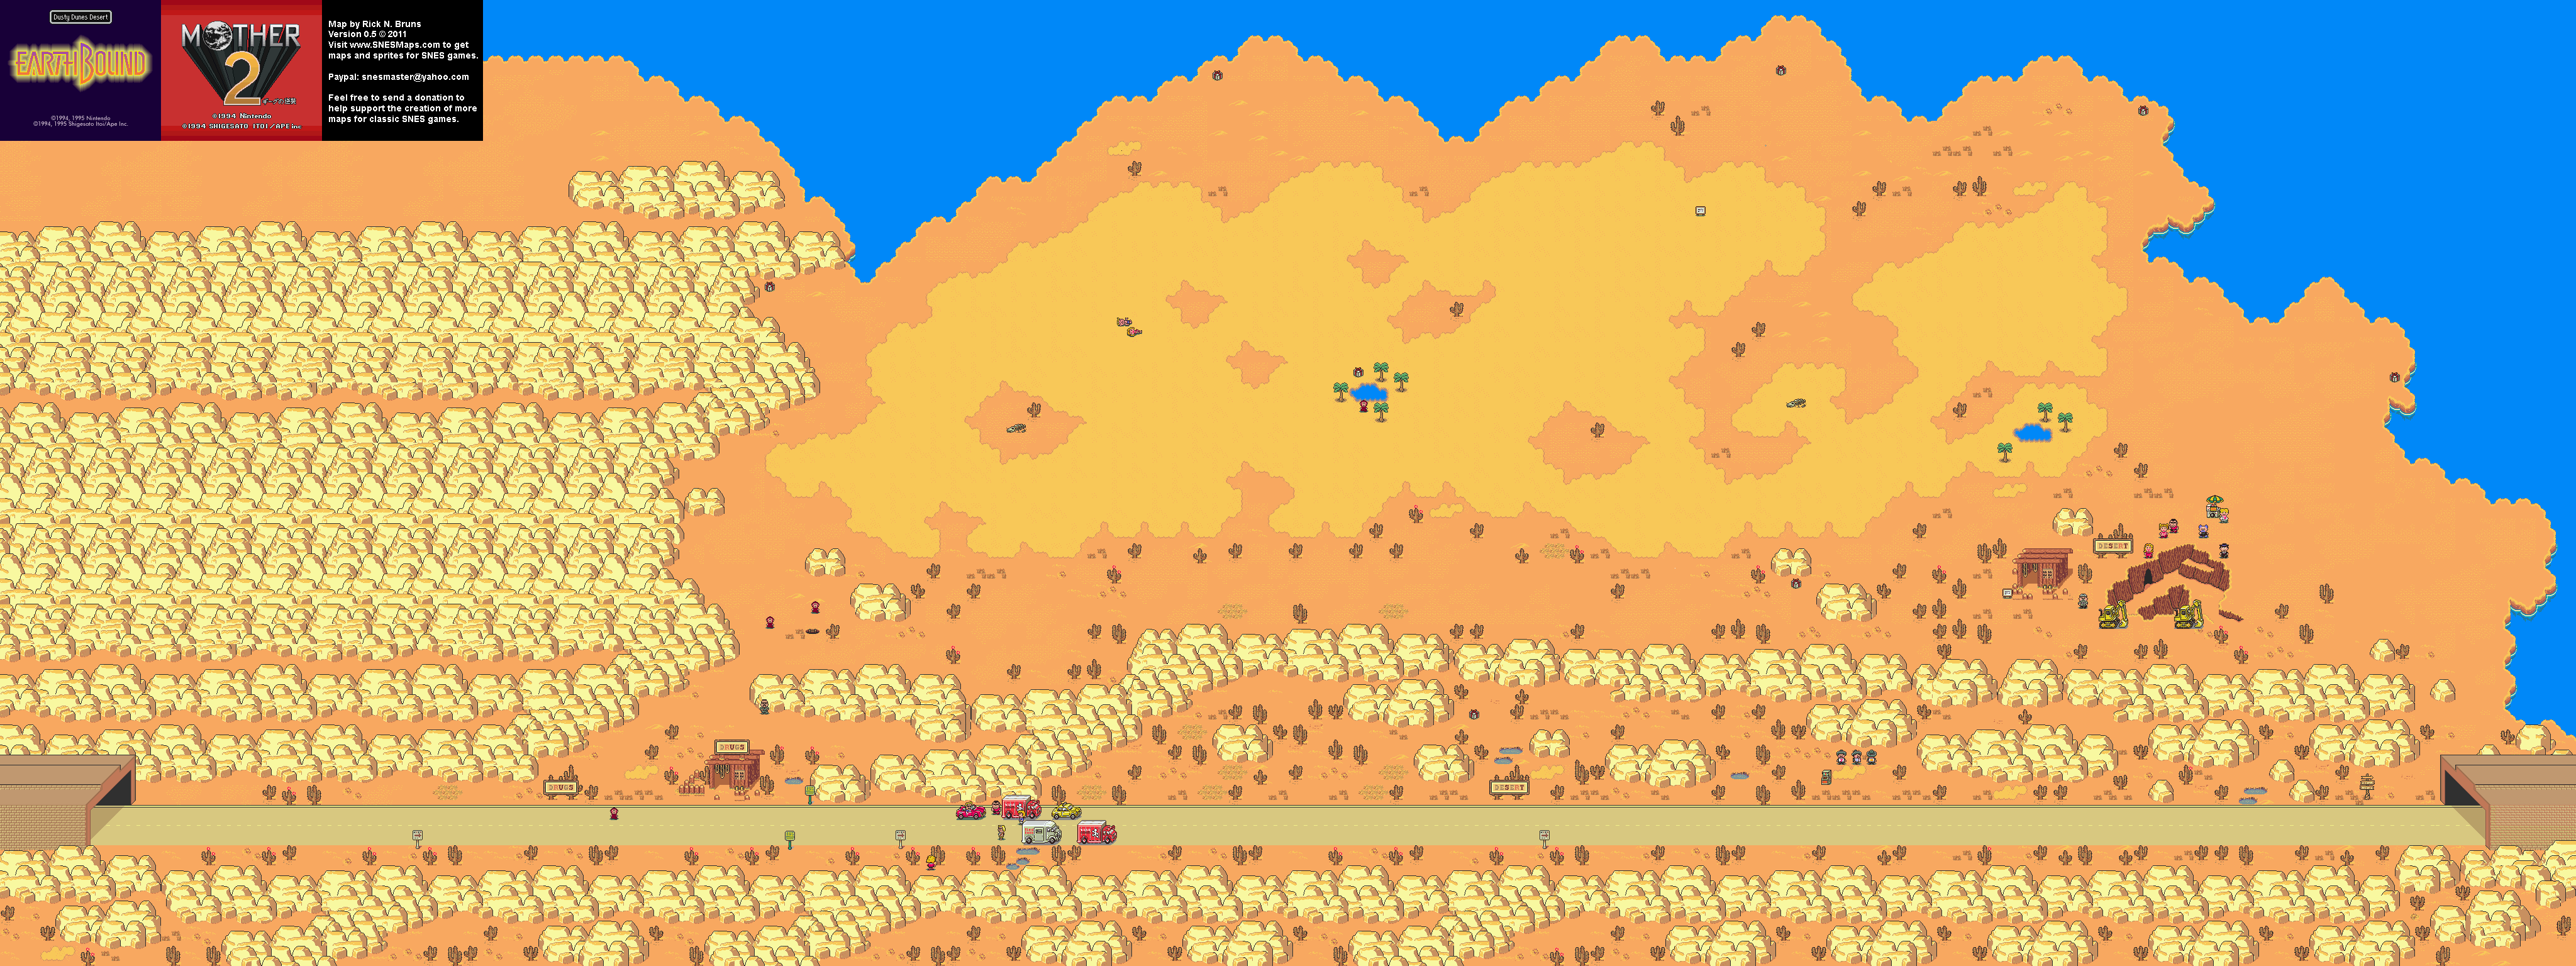 EarthBound (Mother 2) - Dusty Dunes Desert Super Nintendo SNES Map